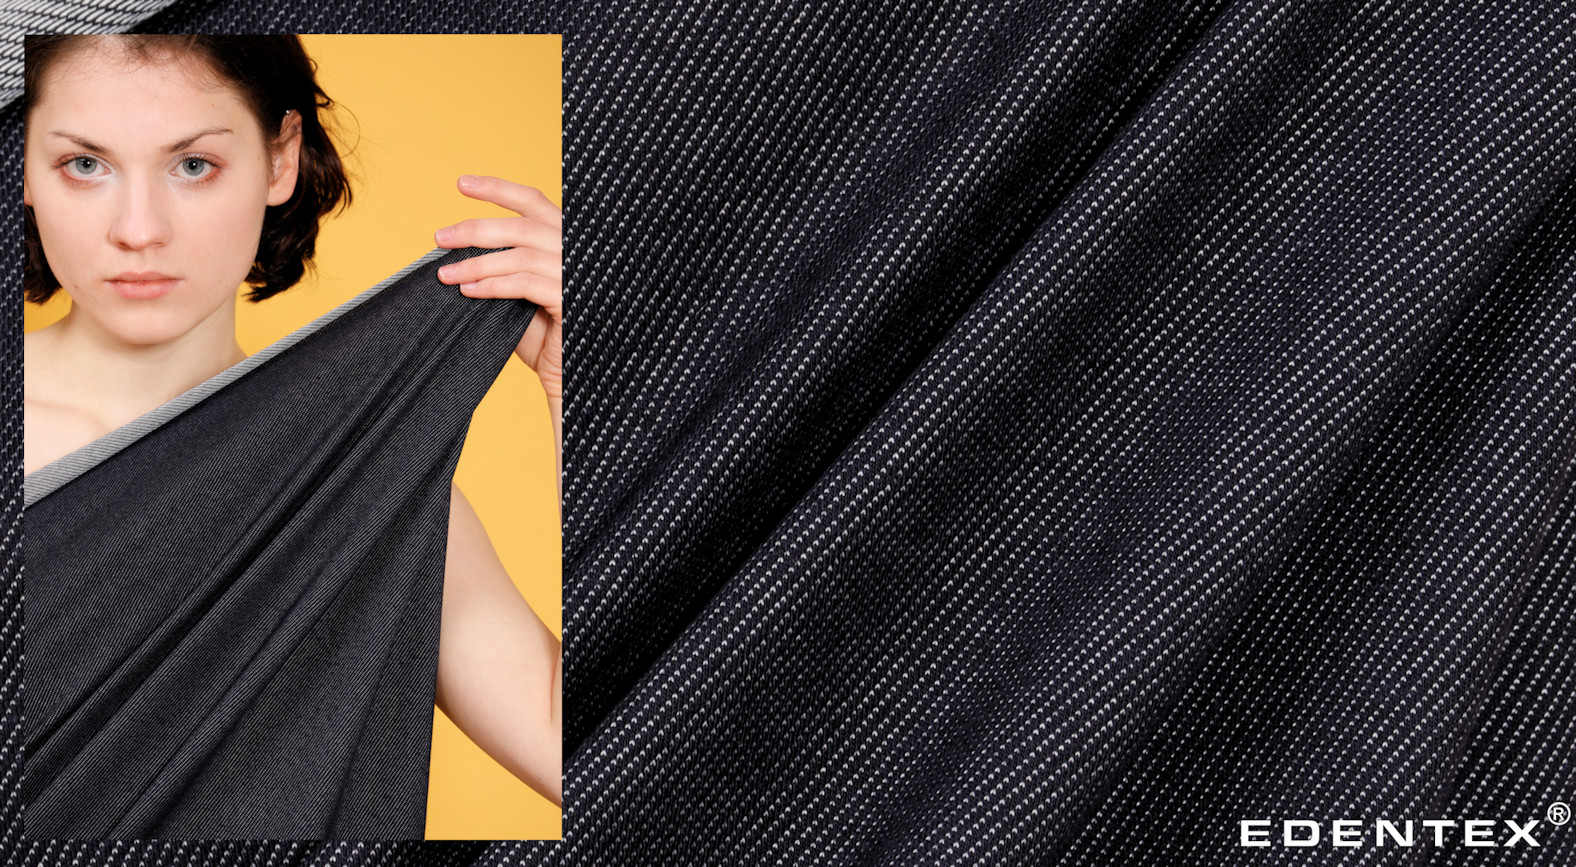 EDENTEX-BLUTEX® knitted denim fabrics